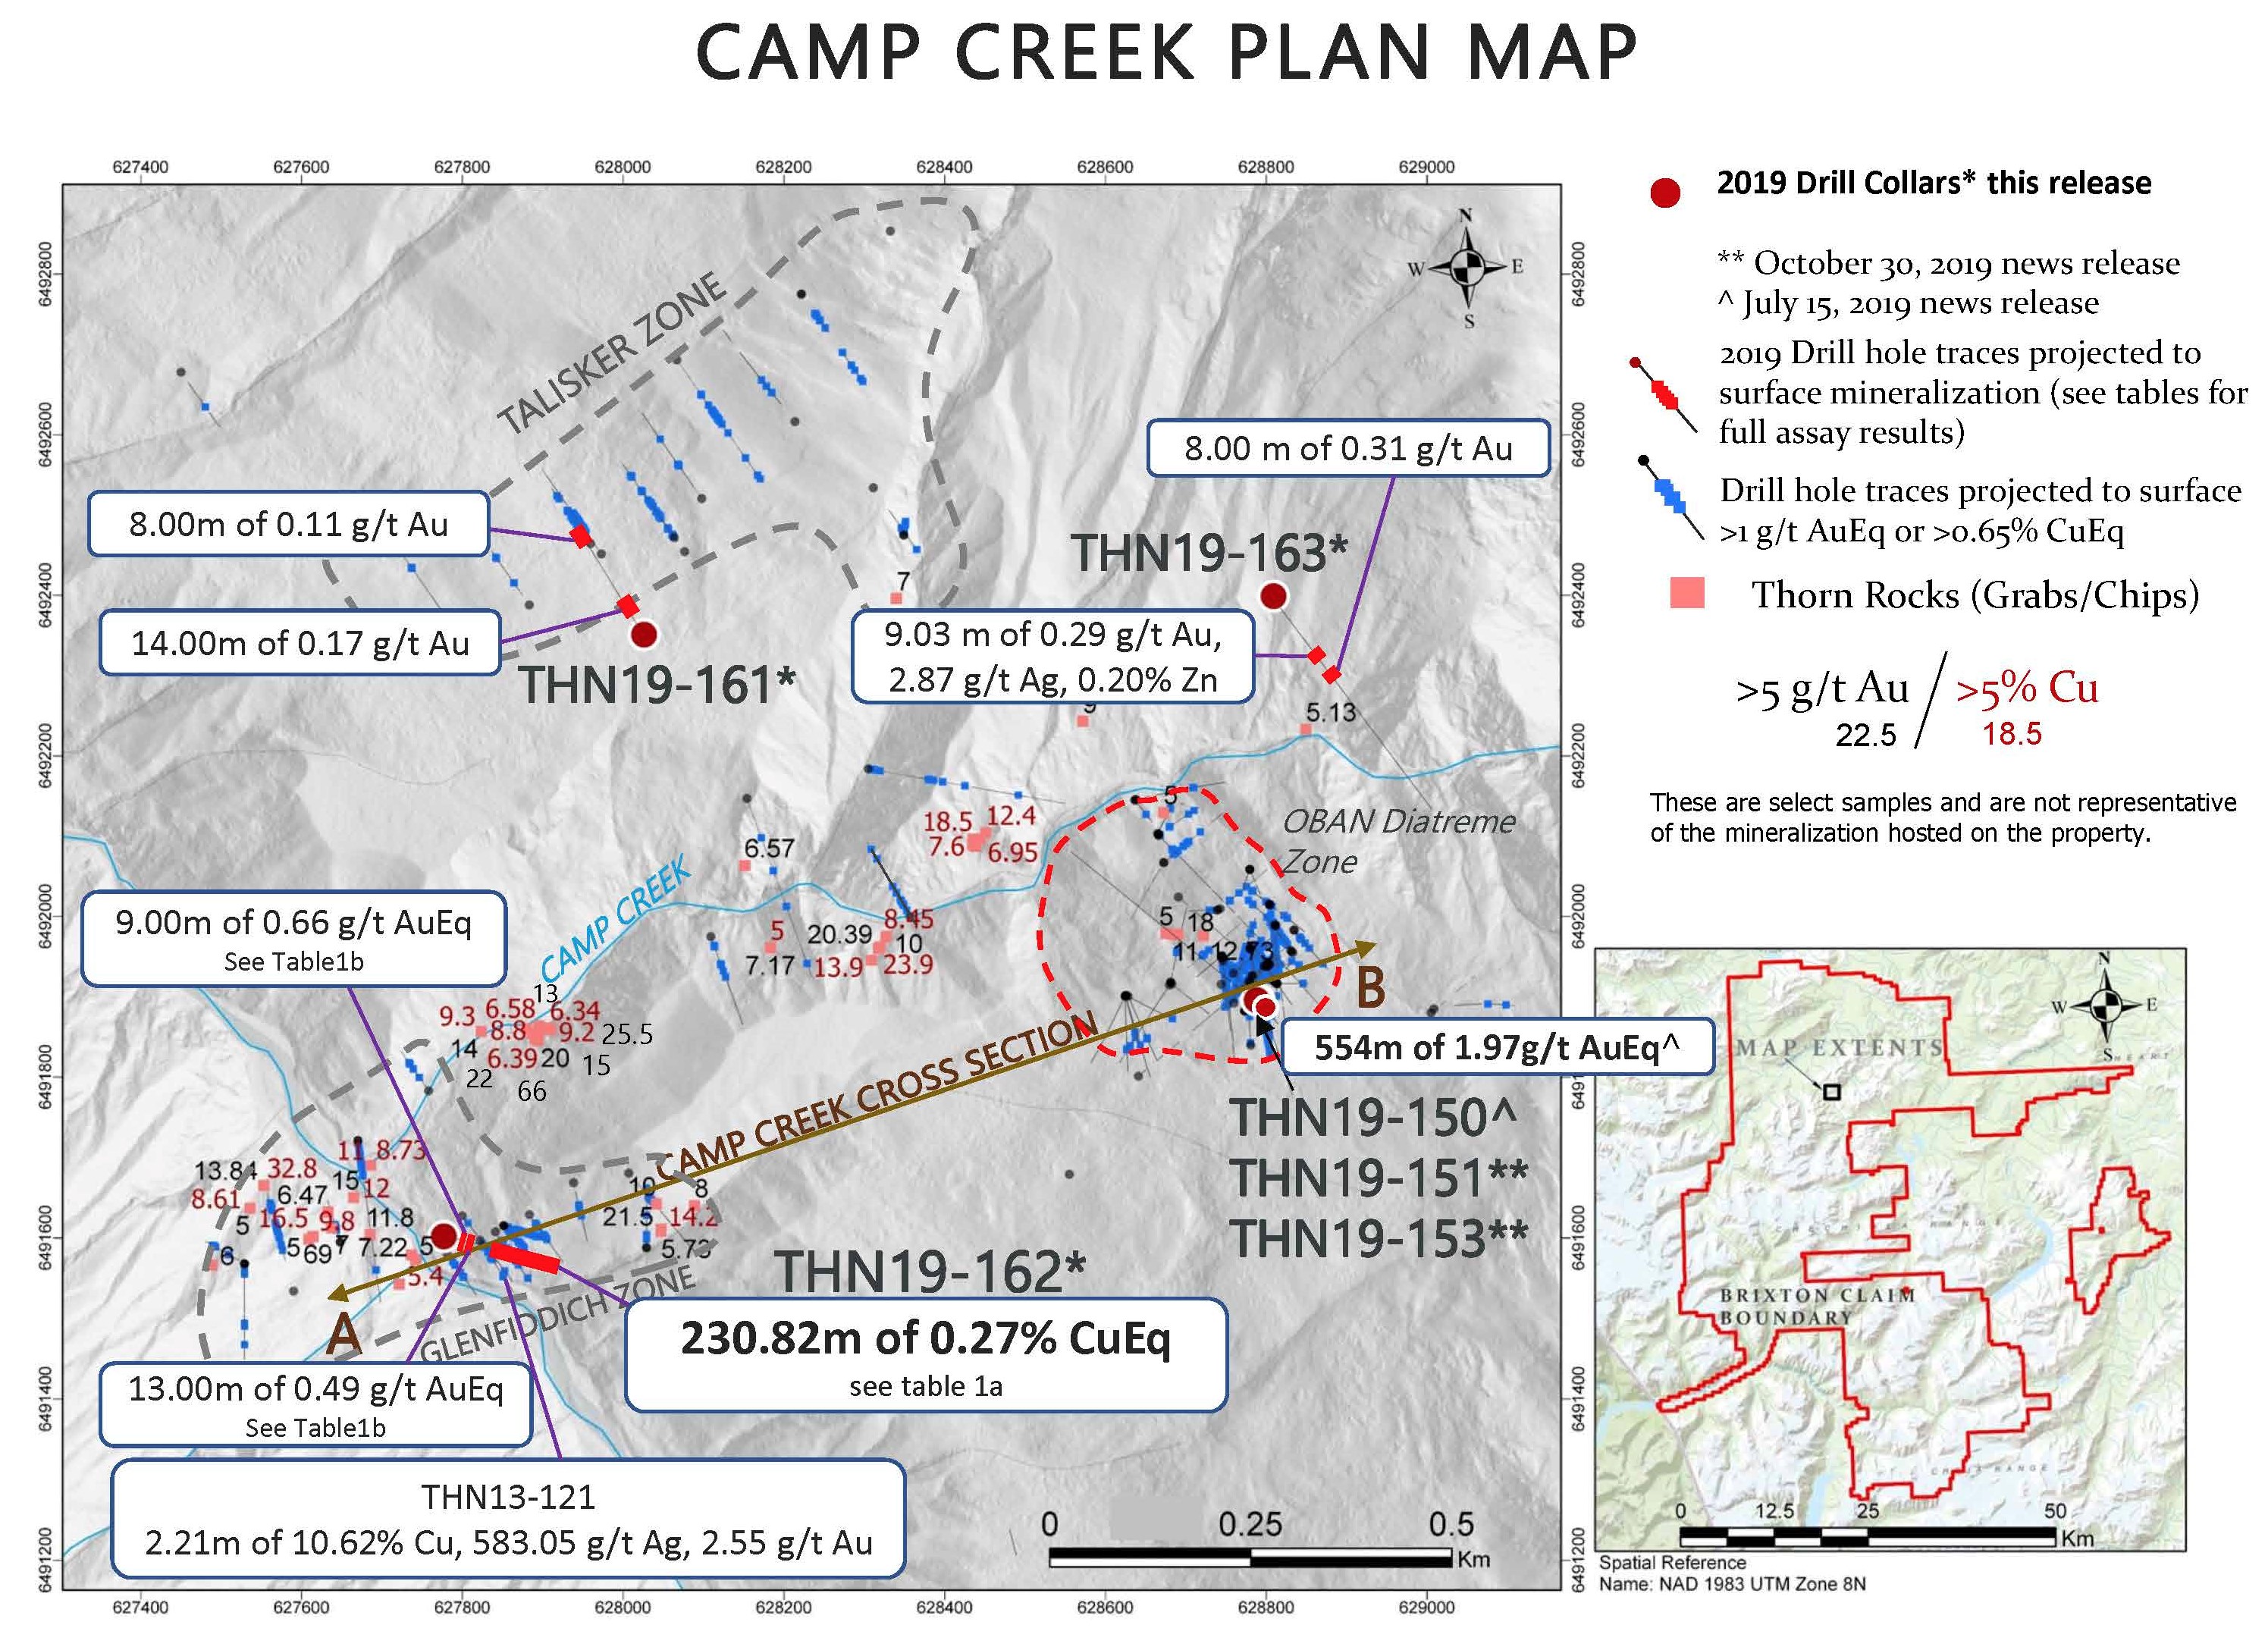 Figure 5 Camp Creek Drill Plan Map